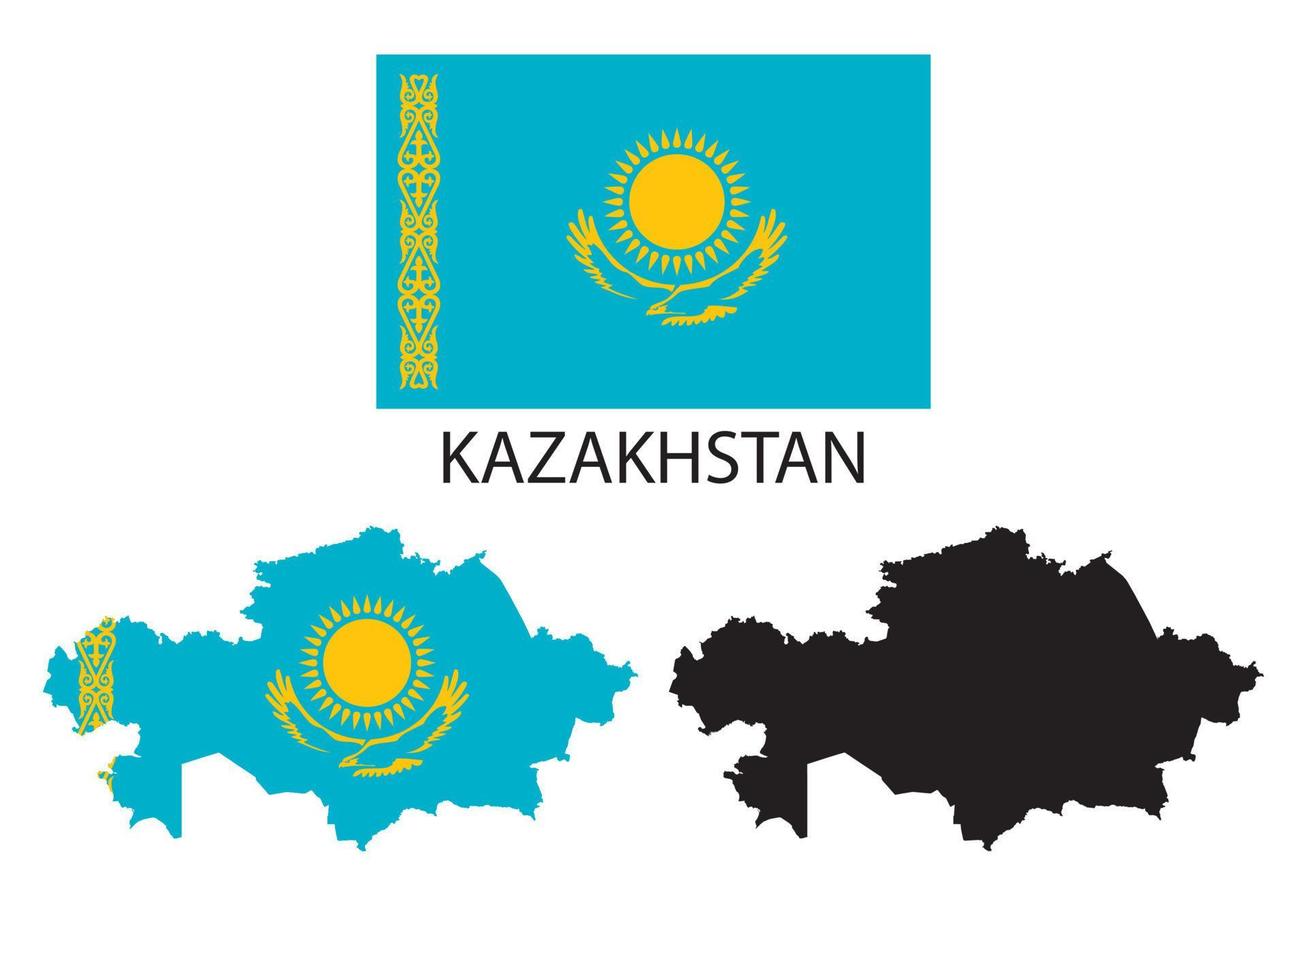 kazakhstan flag and map illustration vector